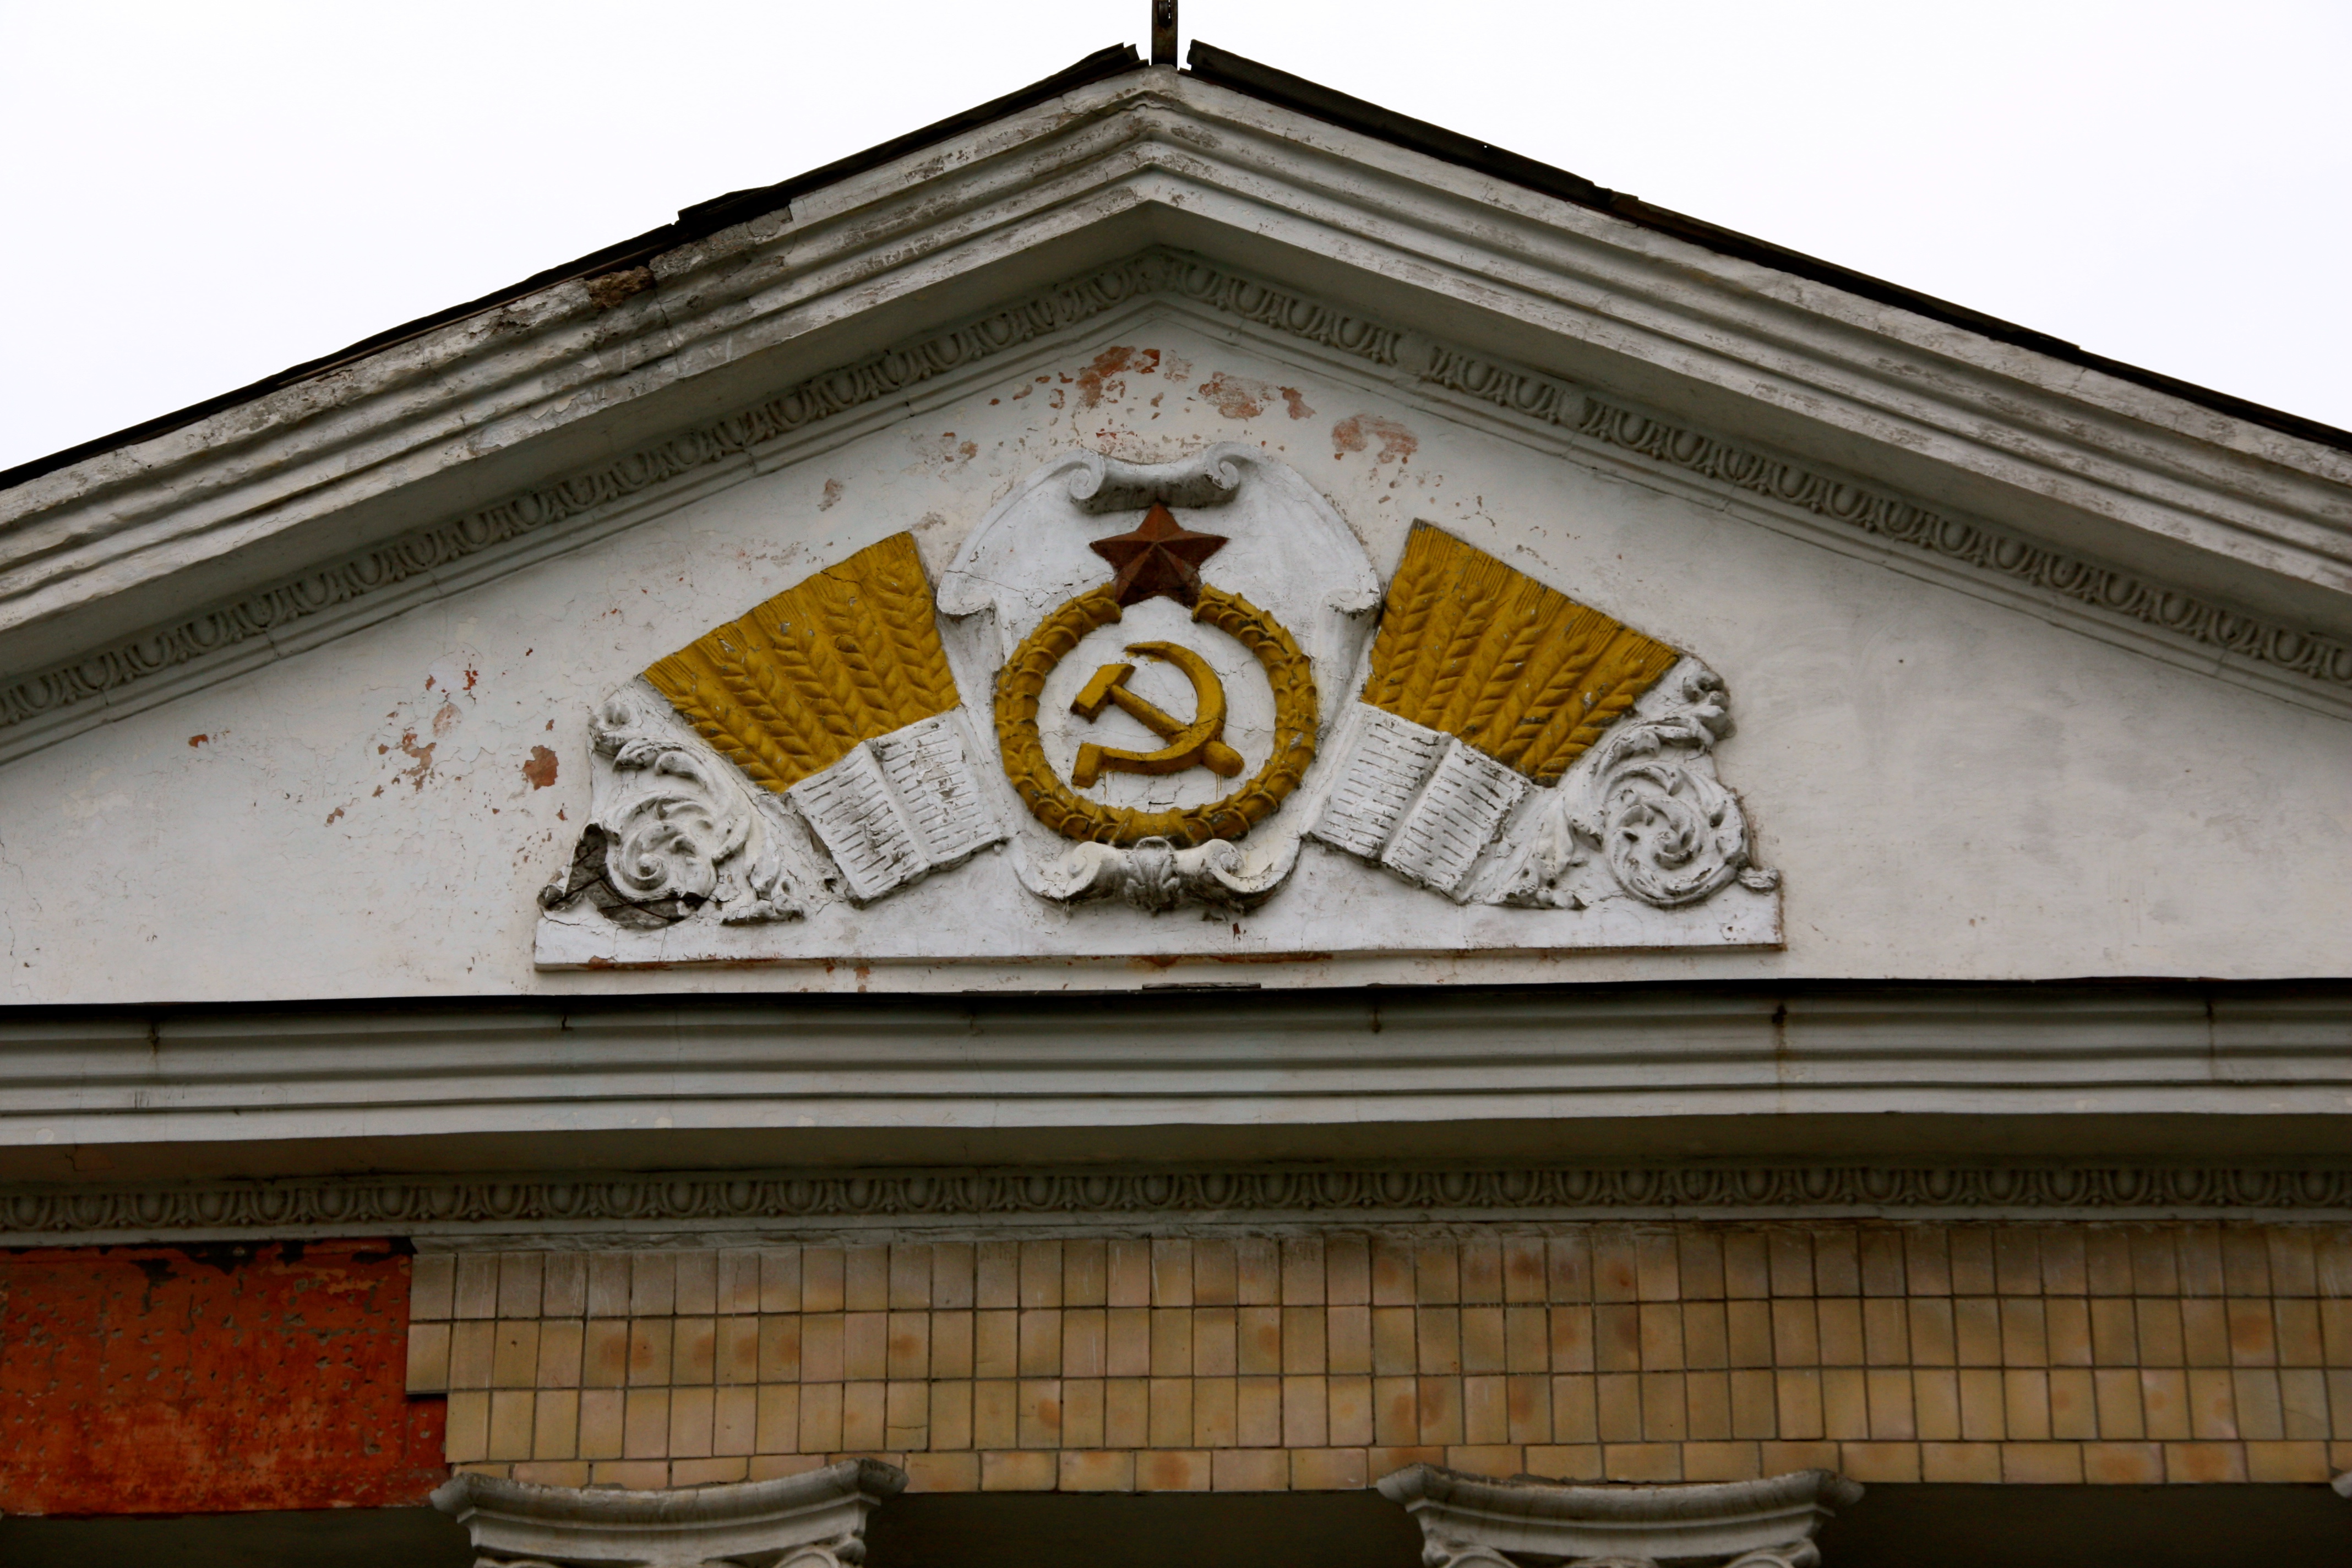 Soviet symbols on a building in Slavyansk, Ukraine. (Photo: Nolan Peterson/The Daily Signal)